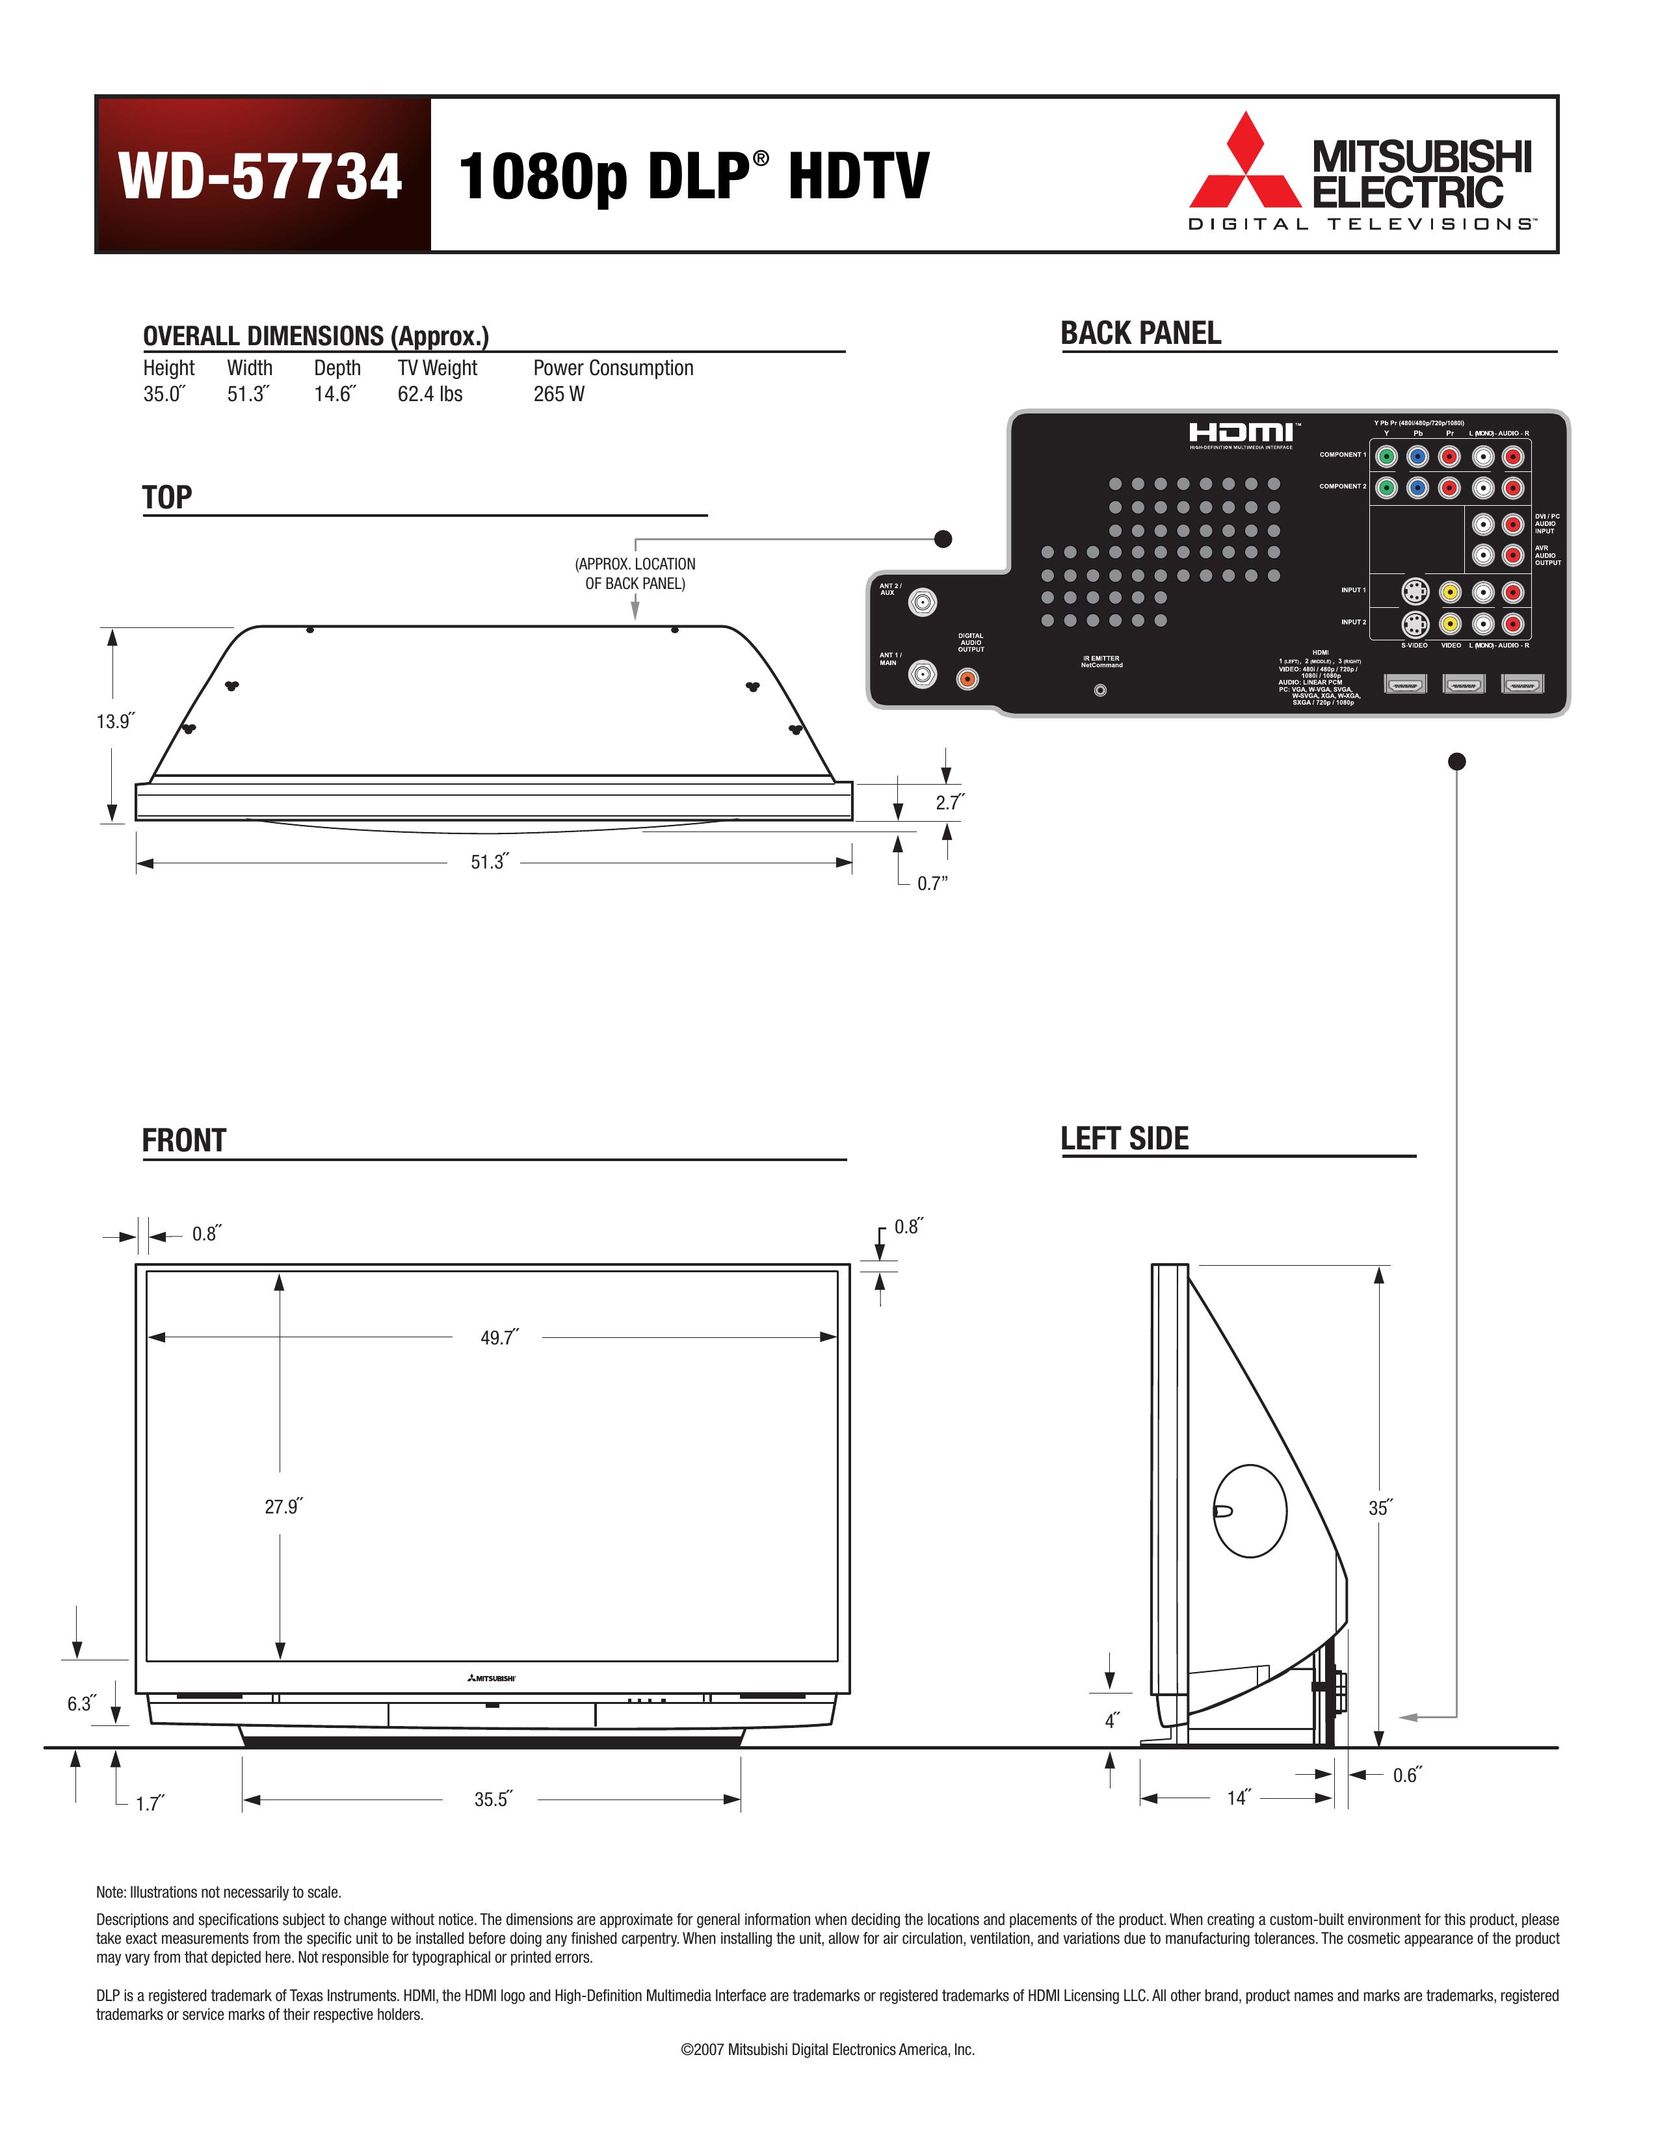 Mitsubishi Electronics WD-57734 Headphones User Manual